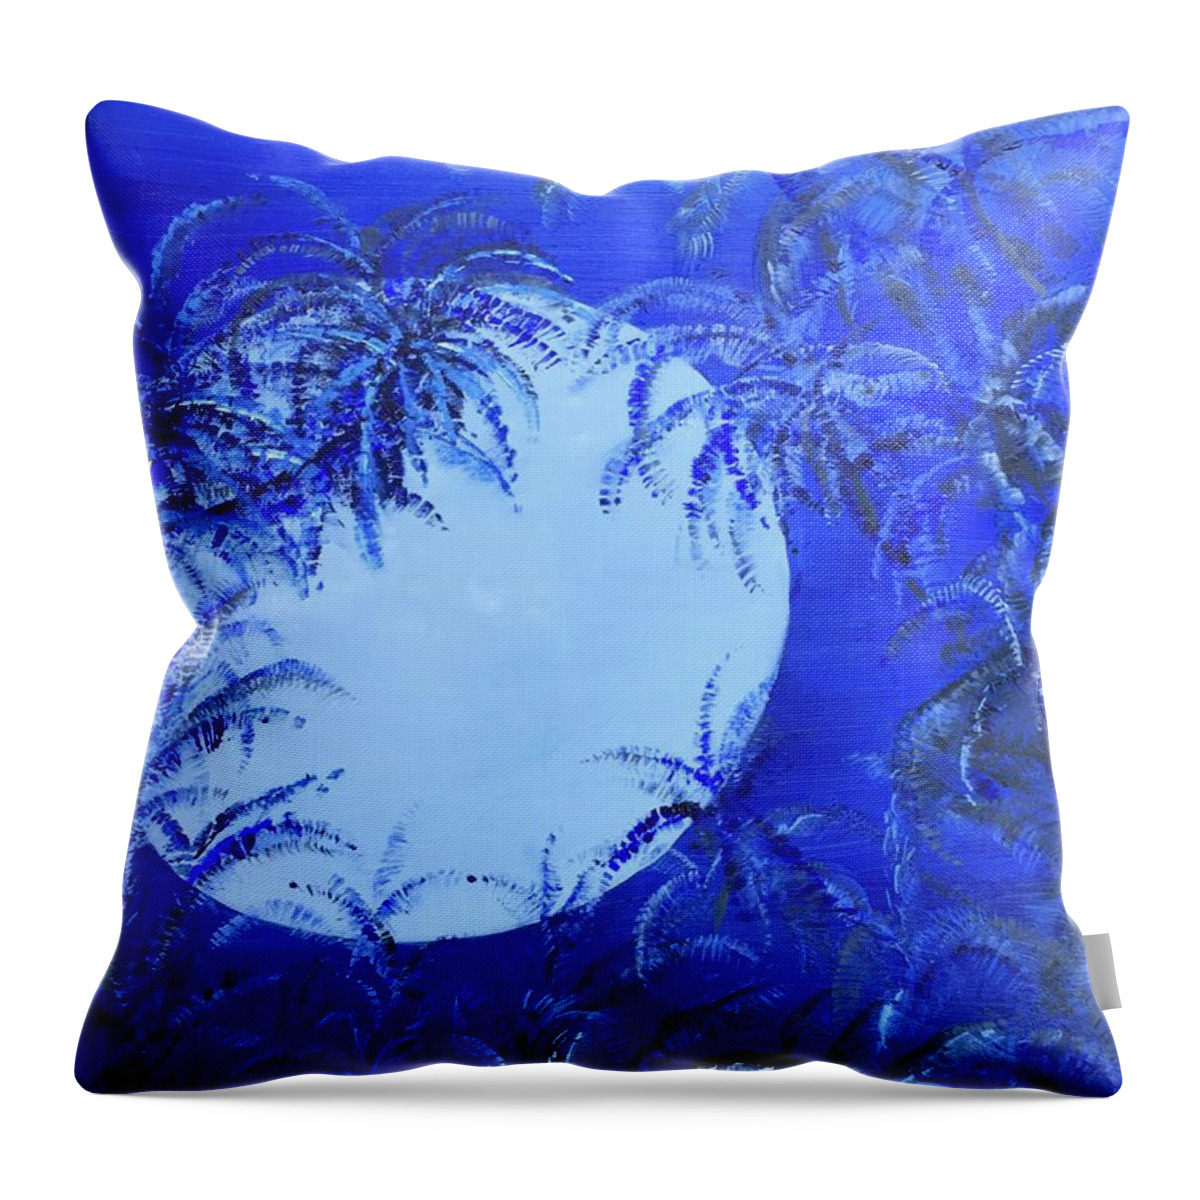 Hawaiian Blue Moon Throw Pillow featuring the painting Hawaii Blue Moon by Michael Silbaugh